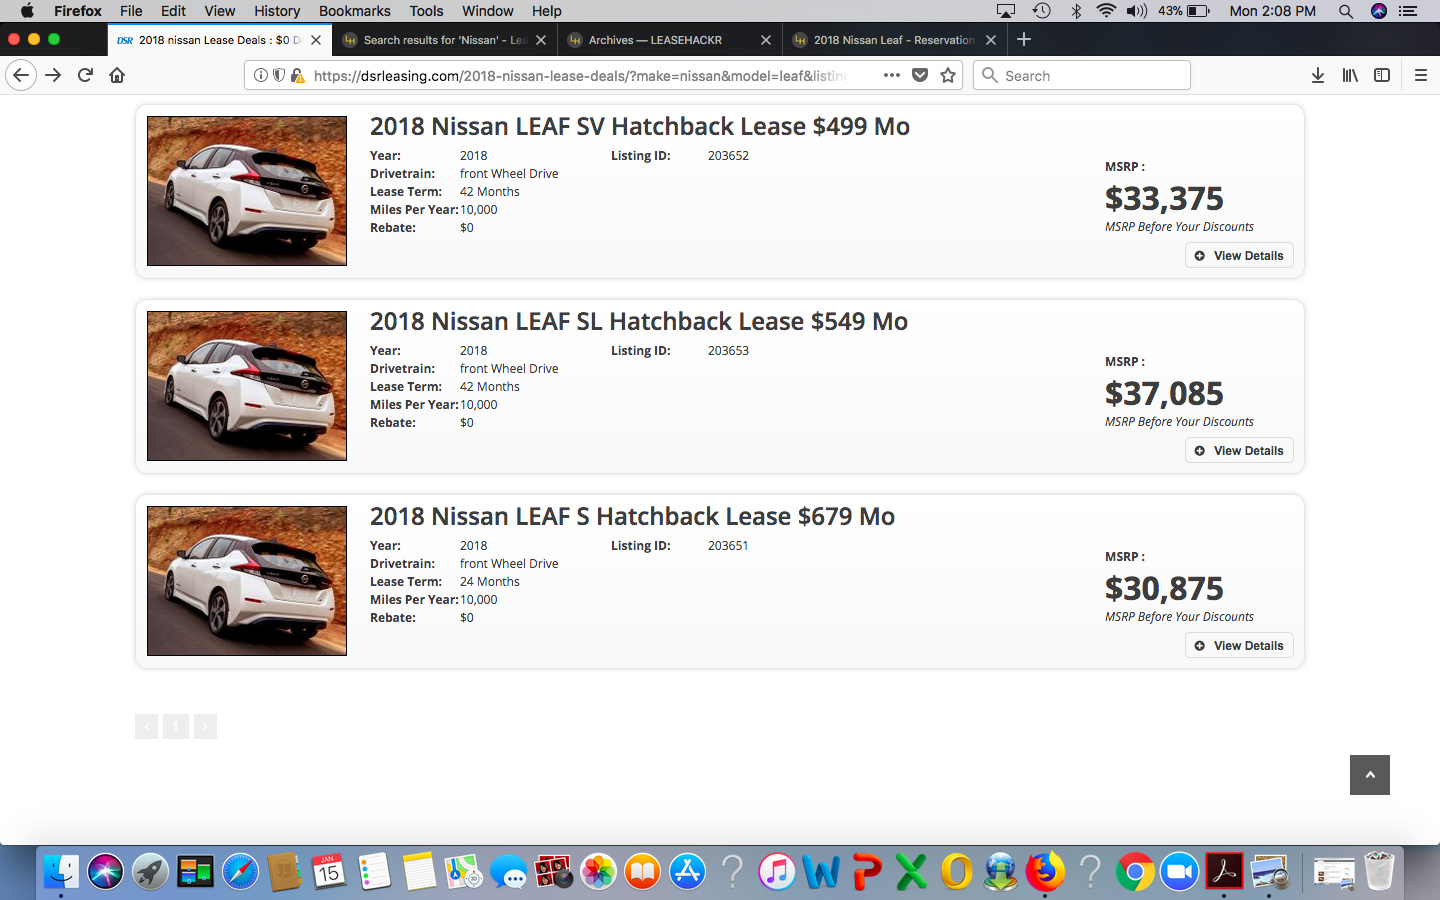 2018 Nissan Leaf Pricing All Models Dsr Leasing Jpg1440x900 347 Kb